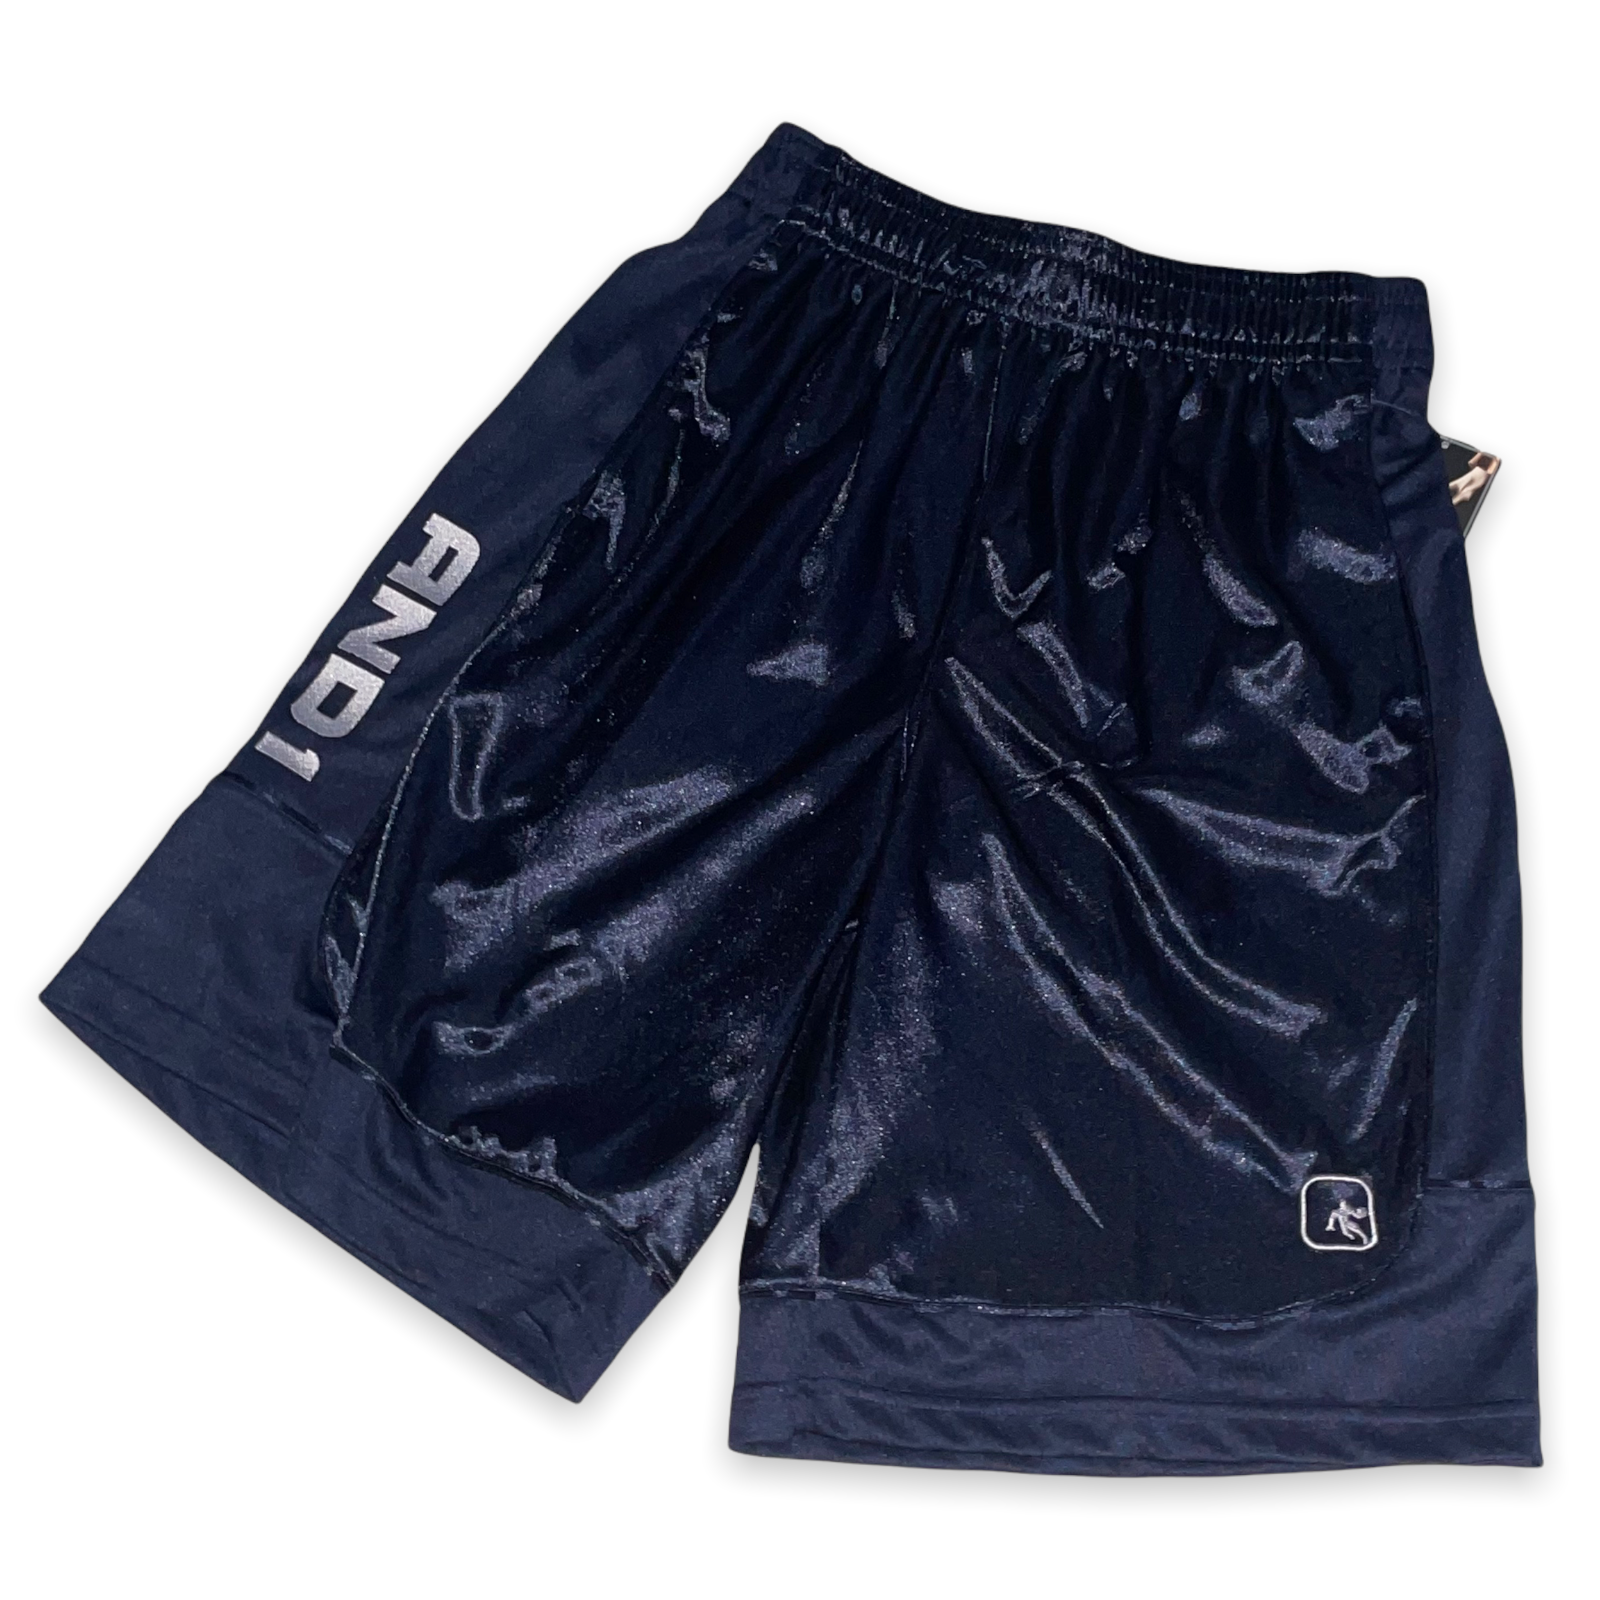 NWT Rare And1 One Dazzle Basketball Shorts Silky Shiny Navy Blue Med